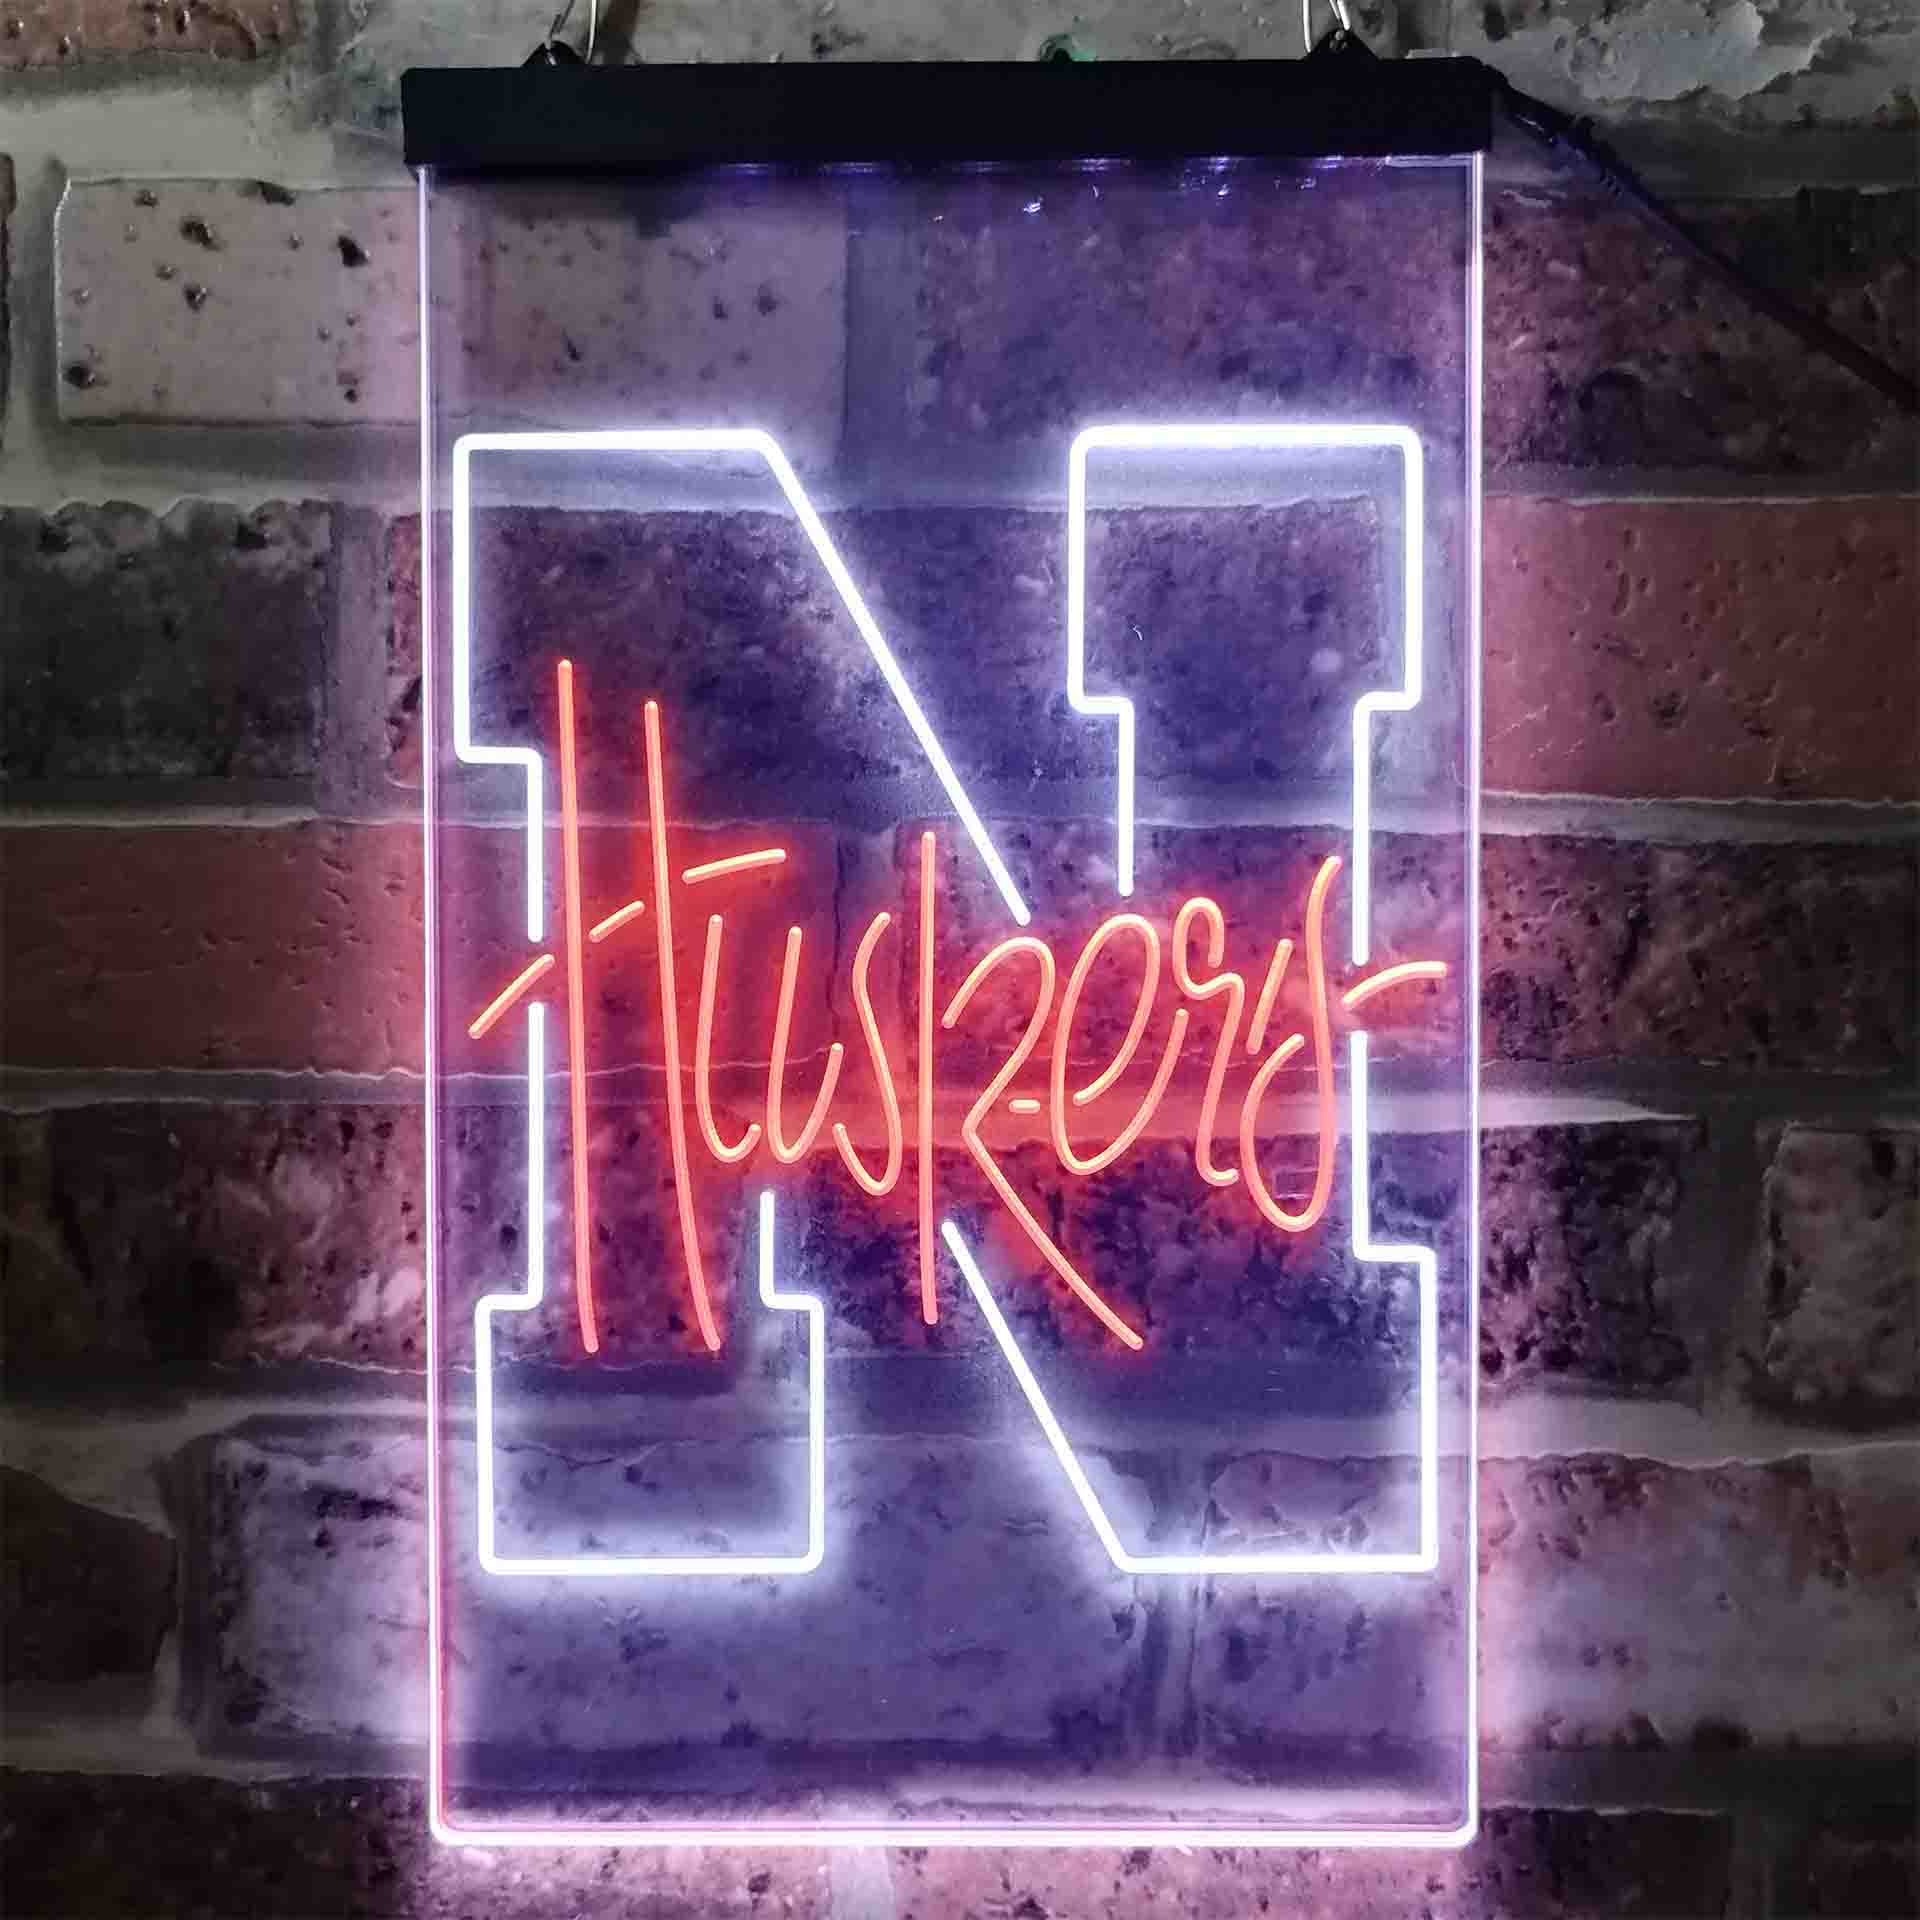 Nebraskas Football Team Sport Club Cornhuskers Group LED Neon Sign